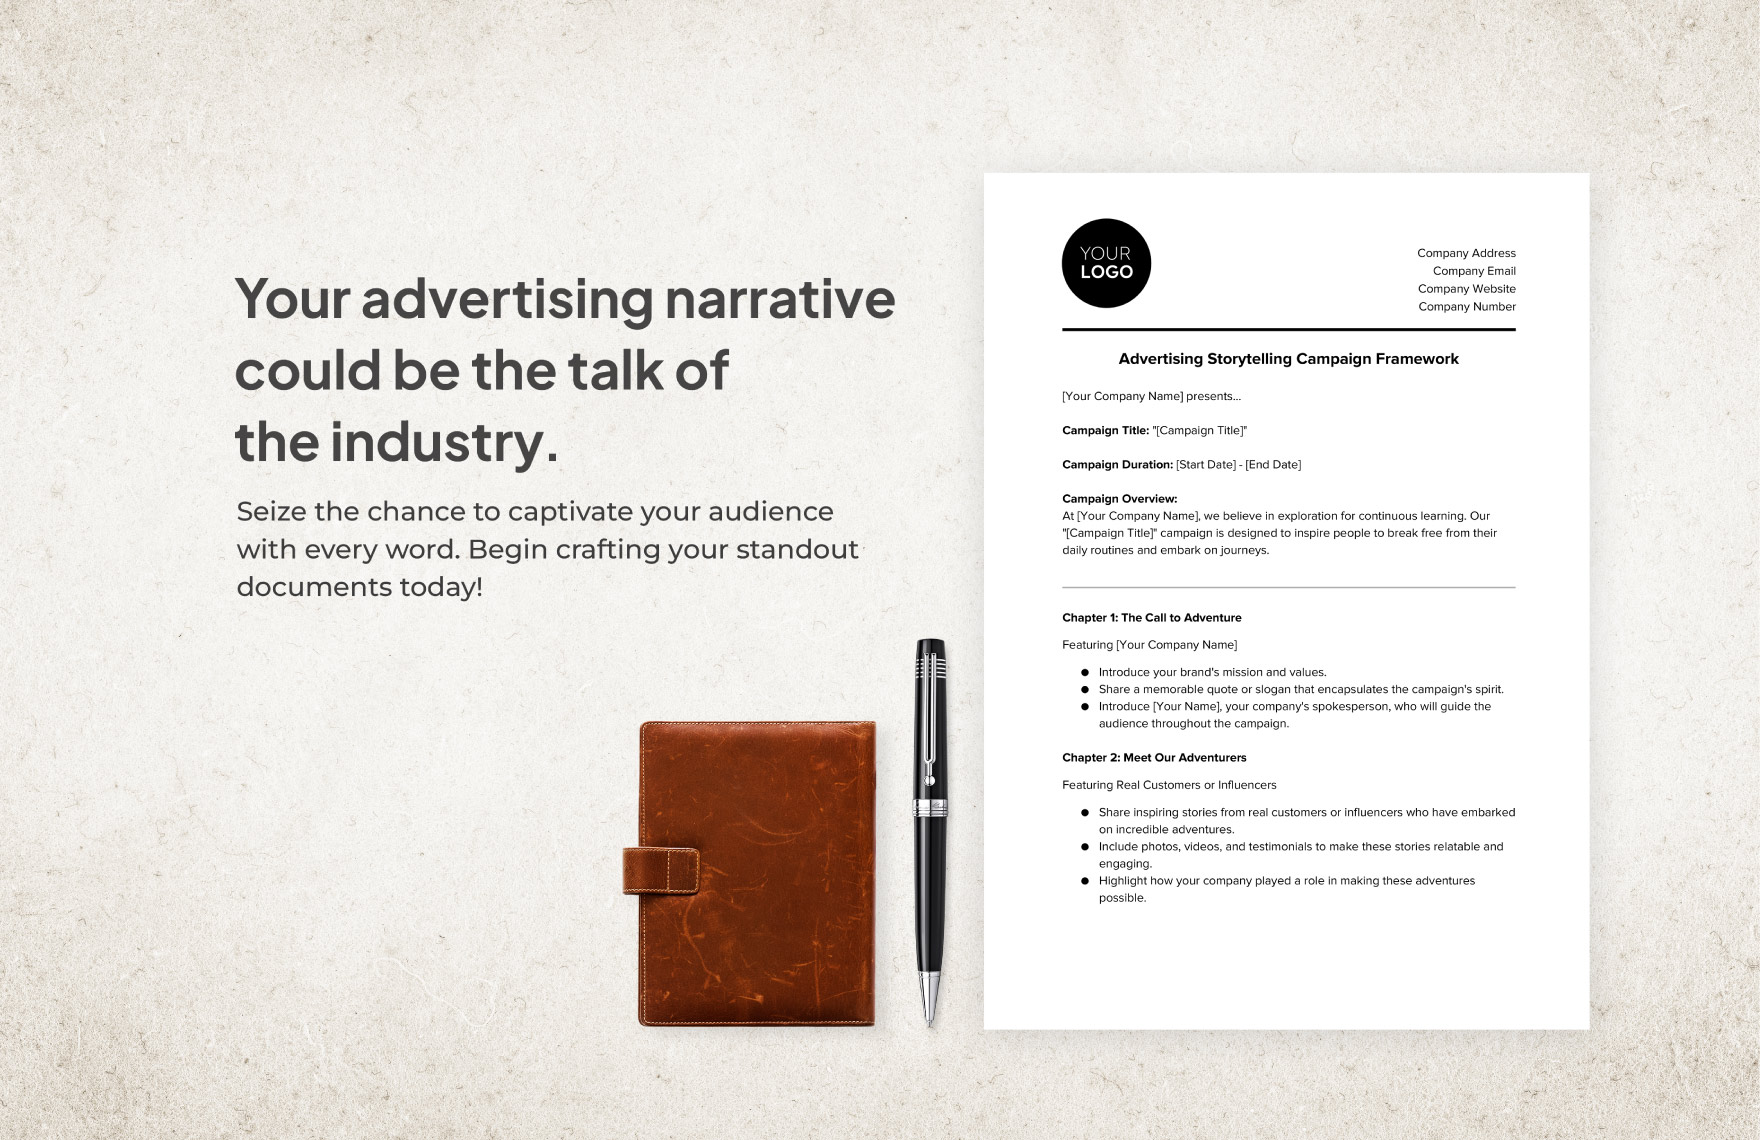 Advertising Storytelling Campaign Framework Template